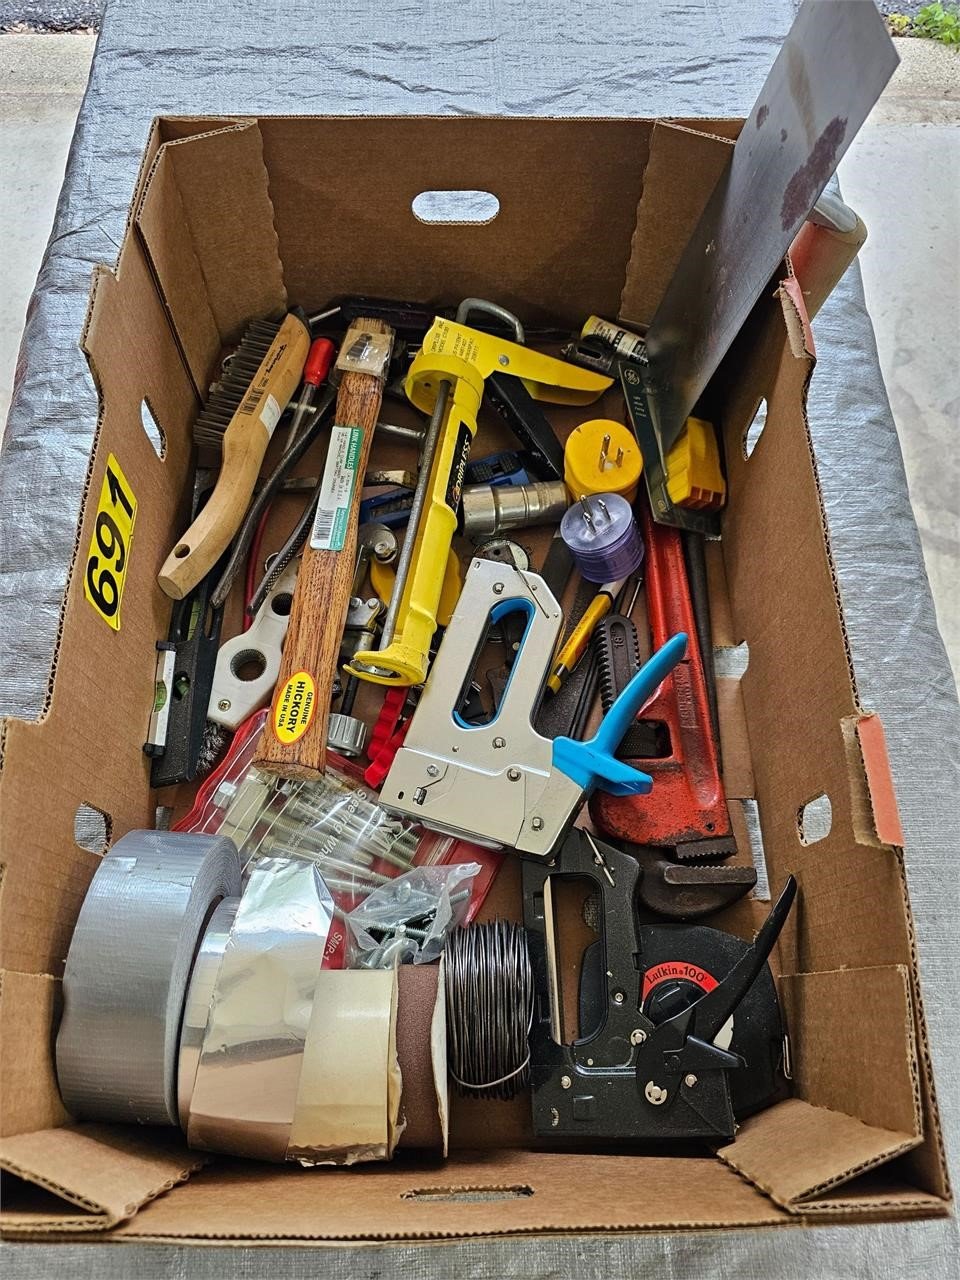 Tools, wire, handy man starter box